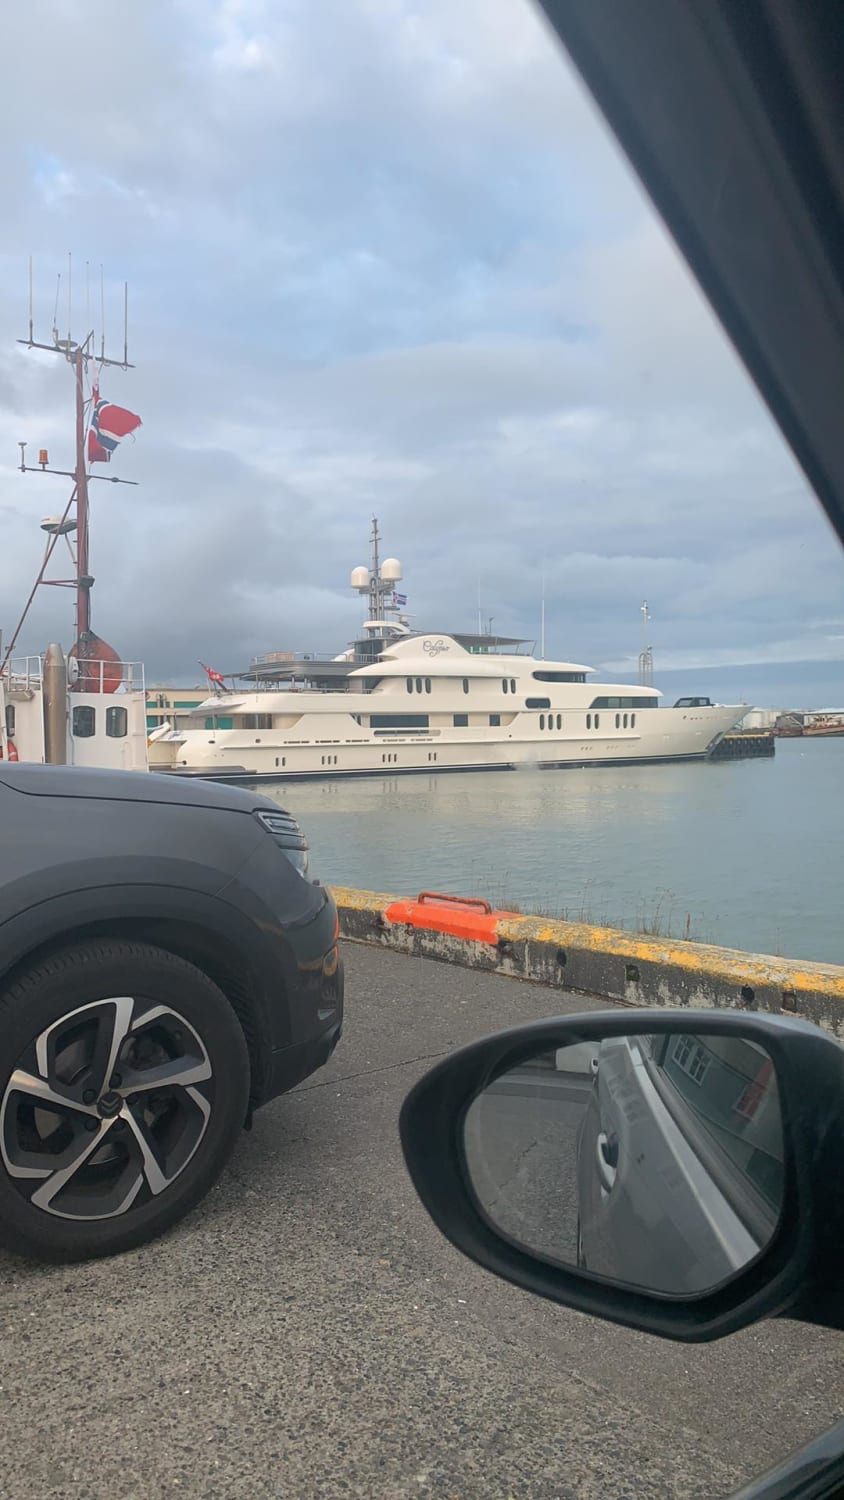 Weird seing a super yacht in 2.500 population town in Iceland🤩